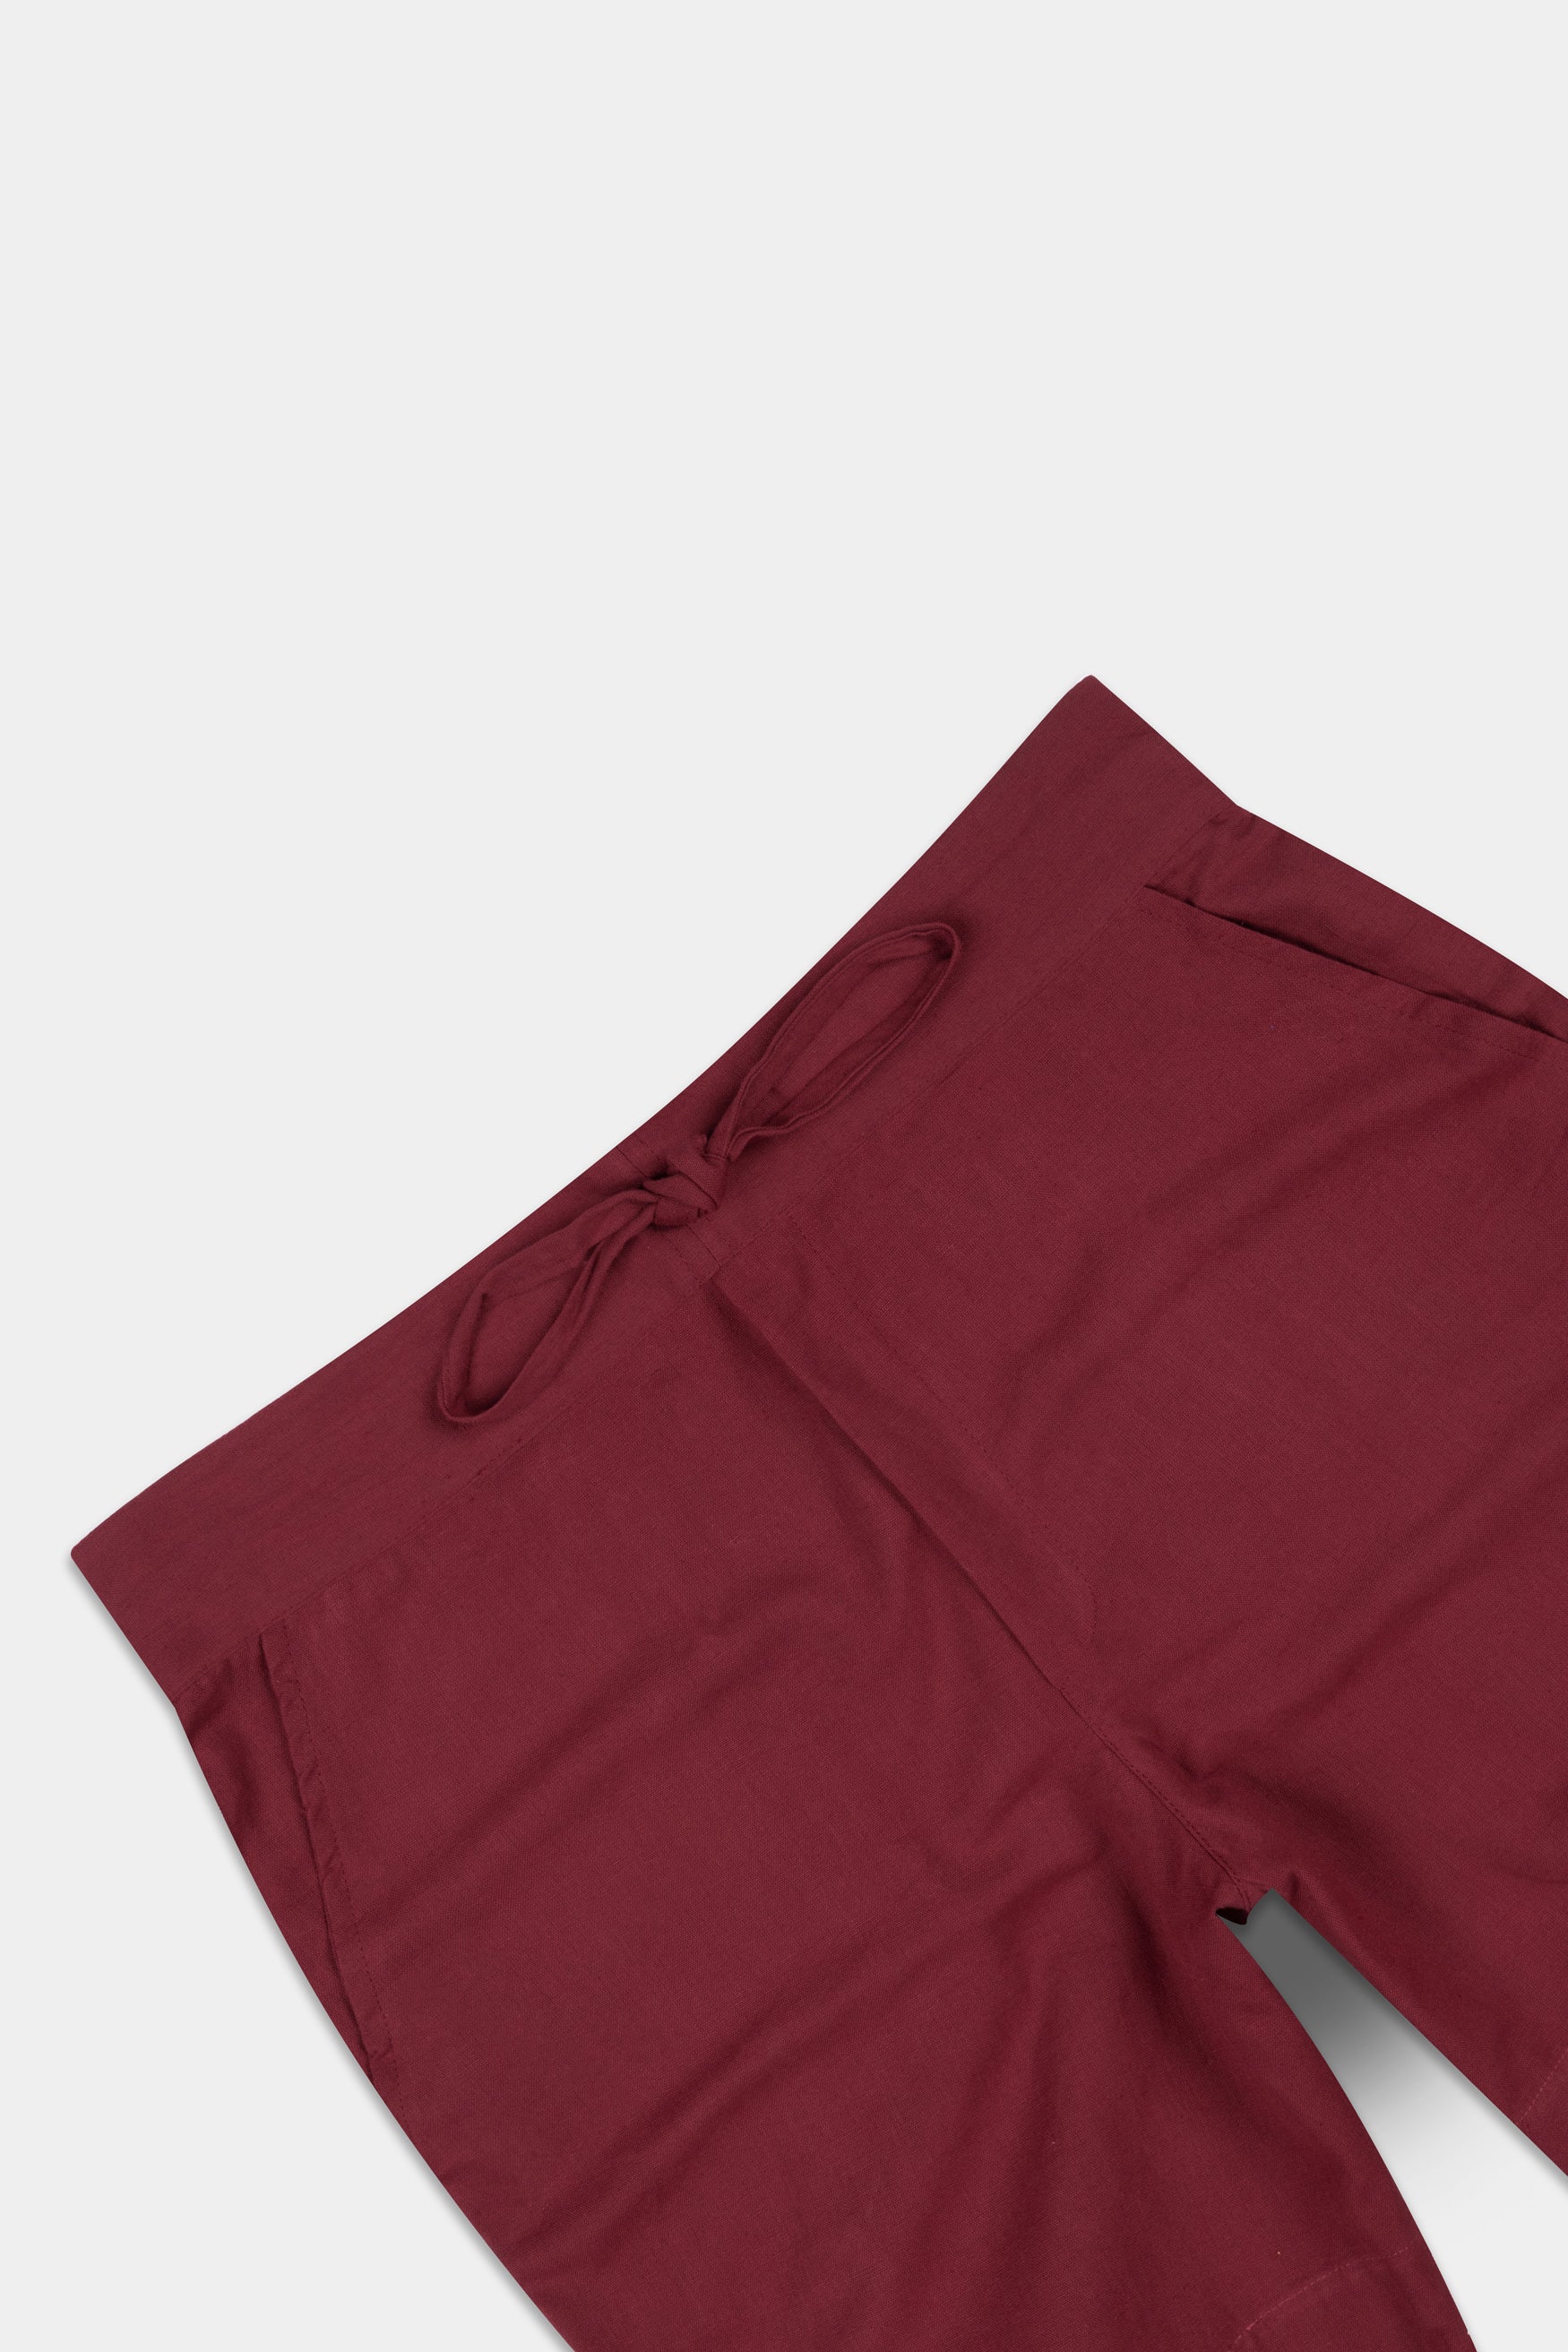 Wine Berry Textured Luxurious Linen Shorts